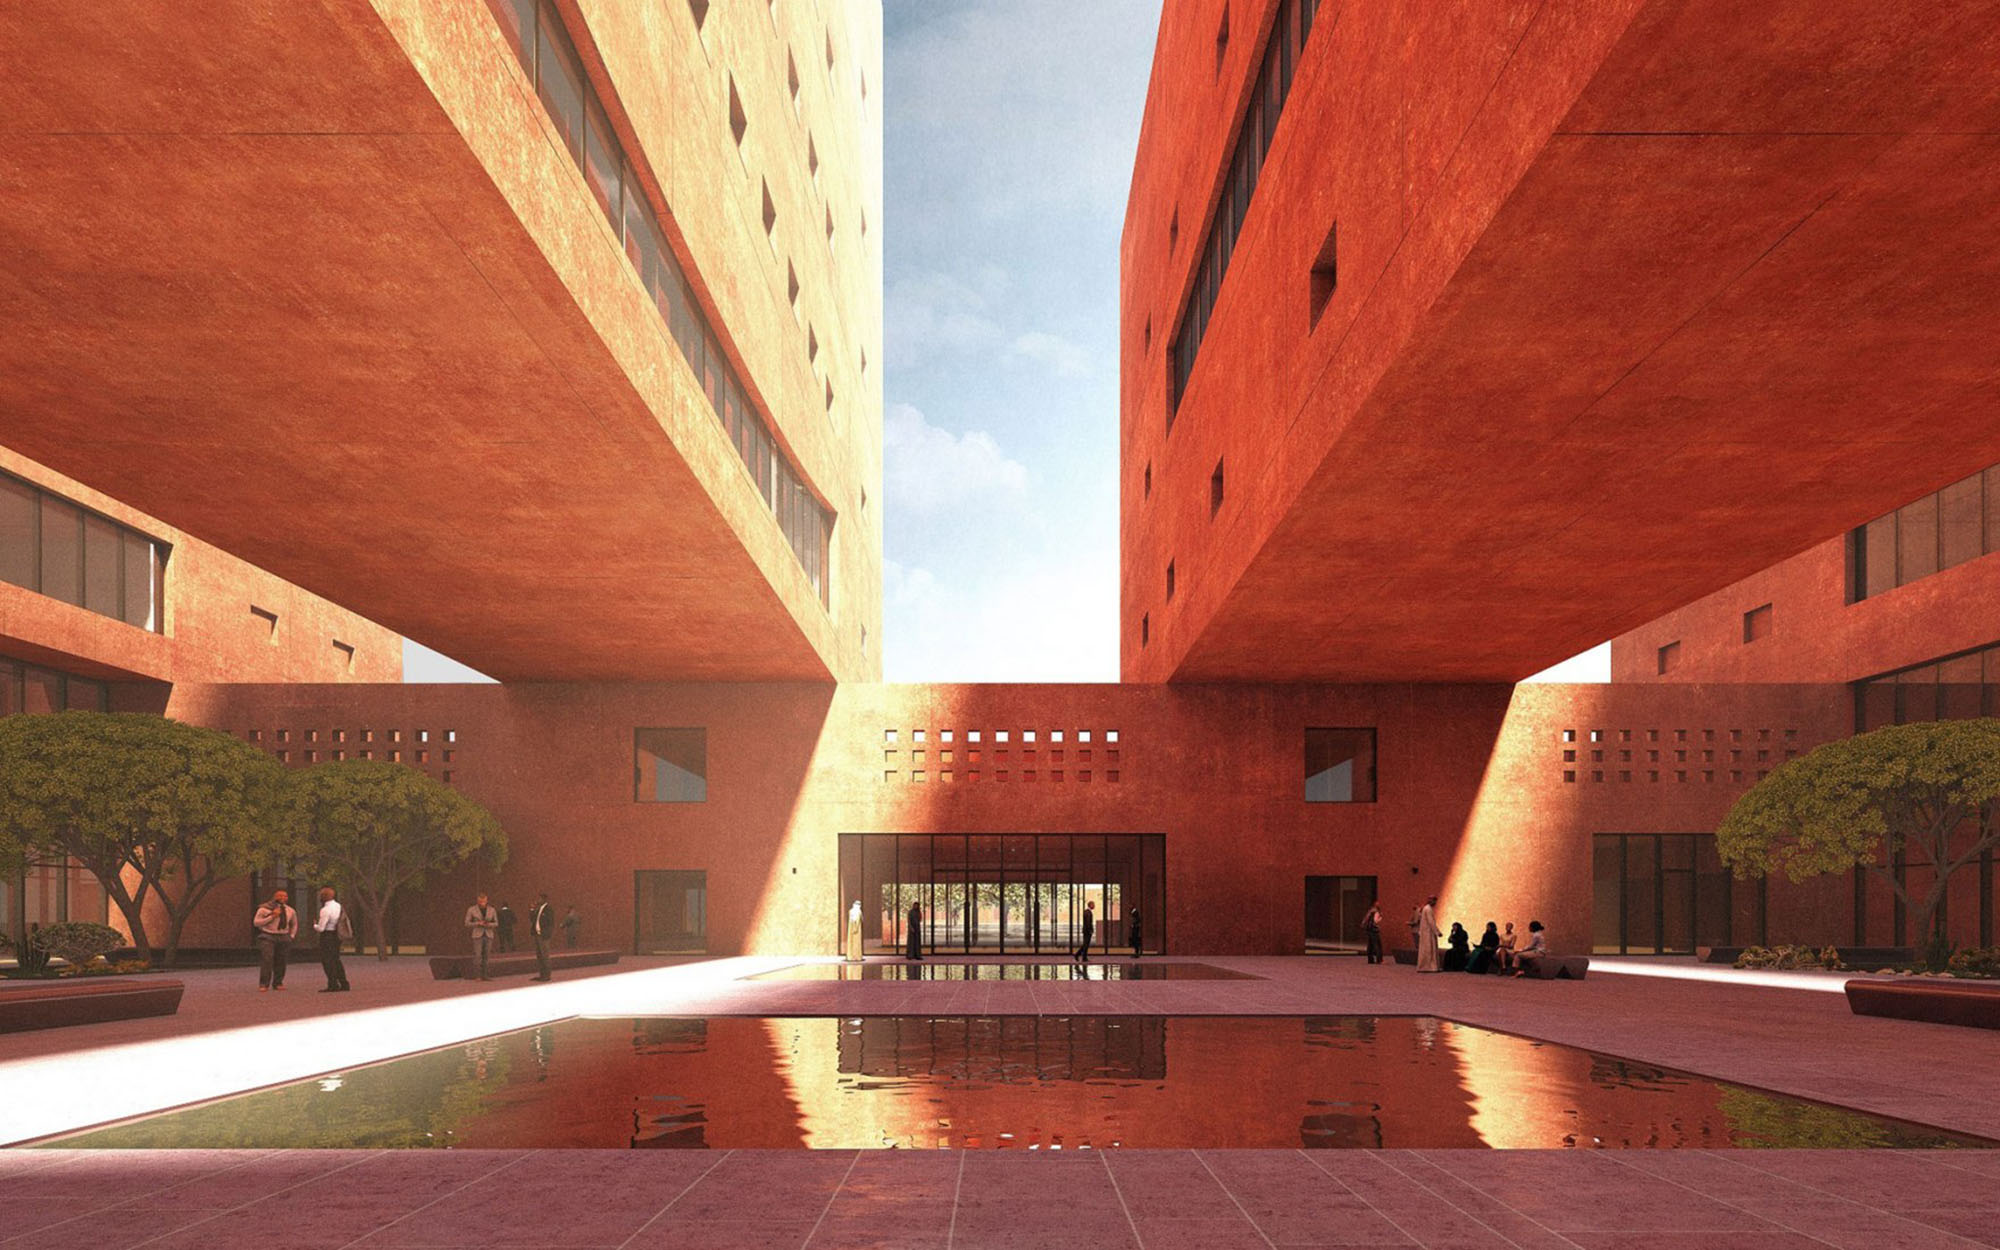 The Africa Institute design by Adjaye Associates